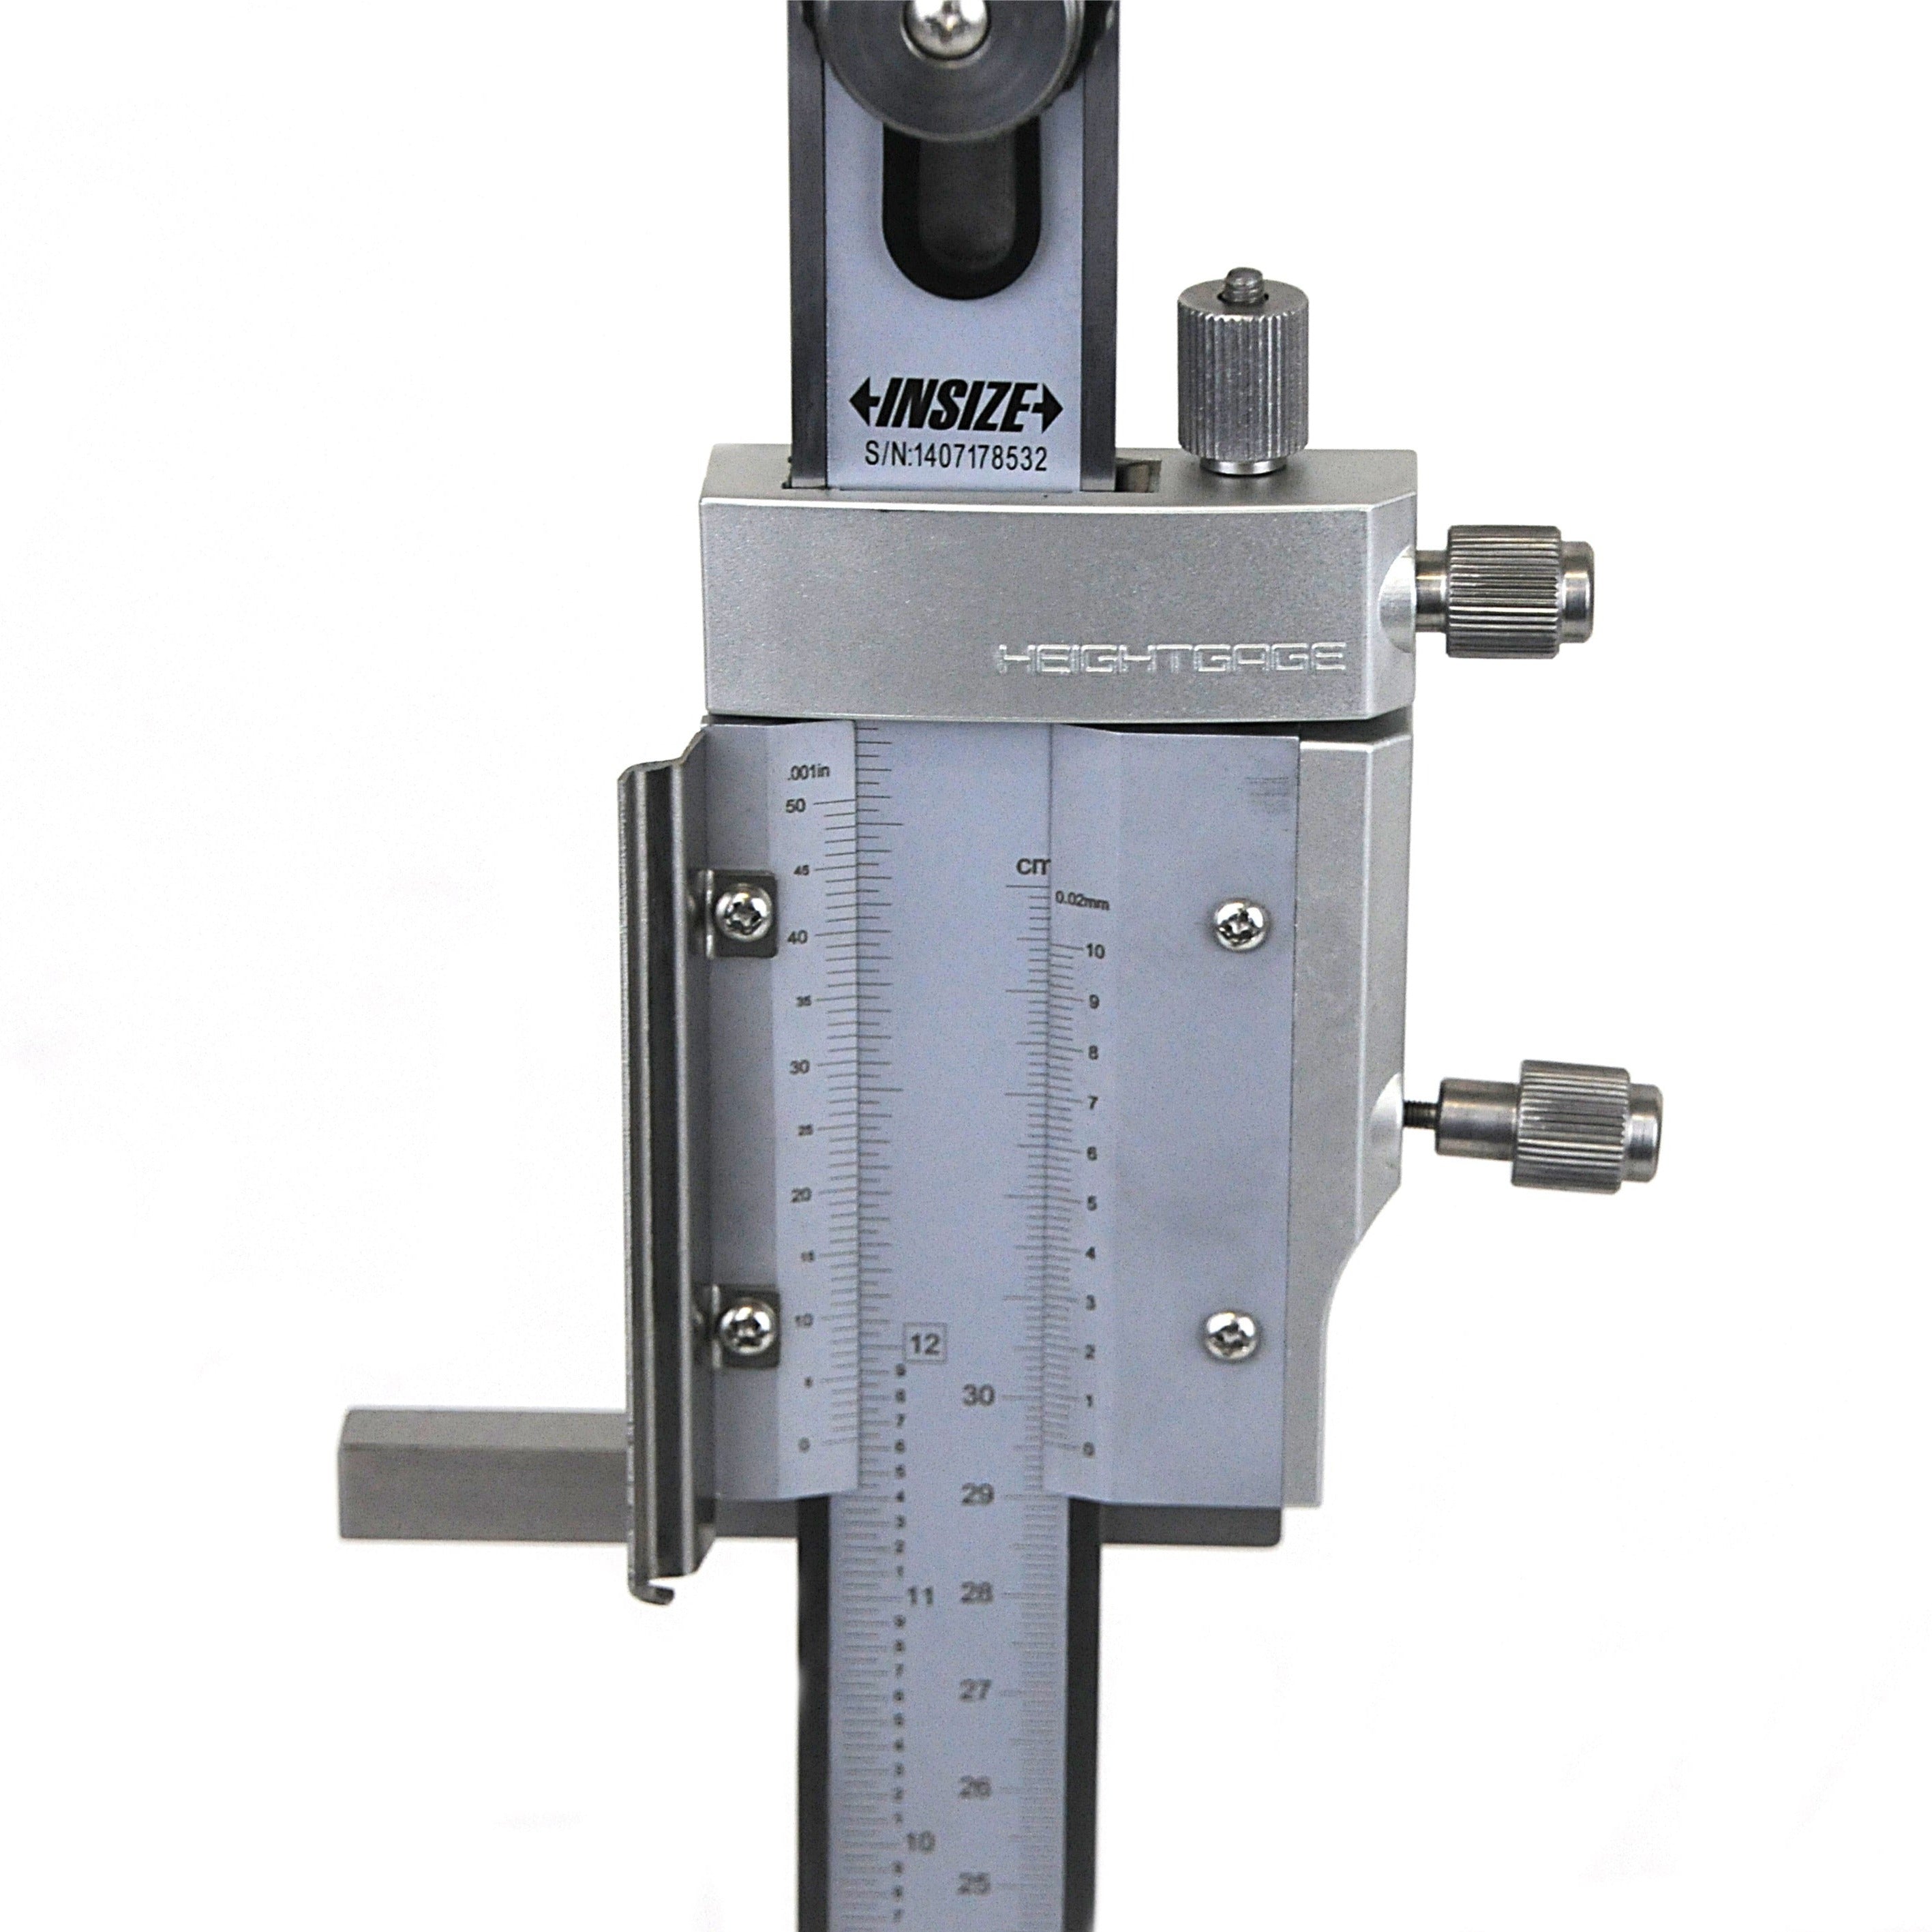 Insize Vernier Depth Gauge 0-300mm / 0-12" Range Series 1250-300